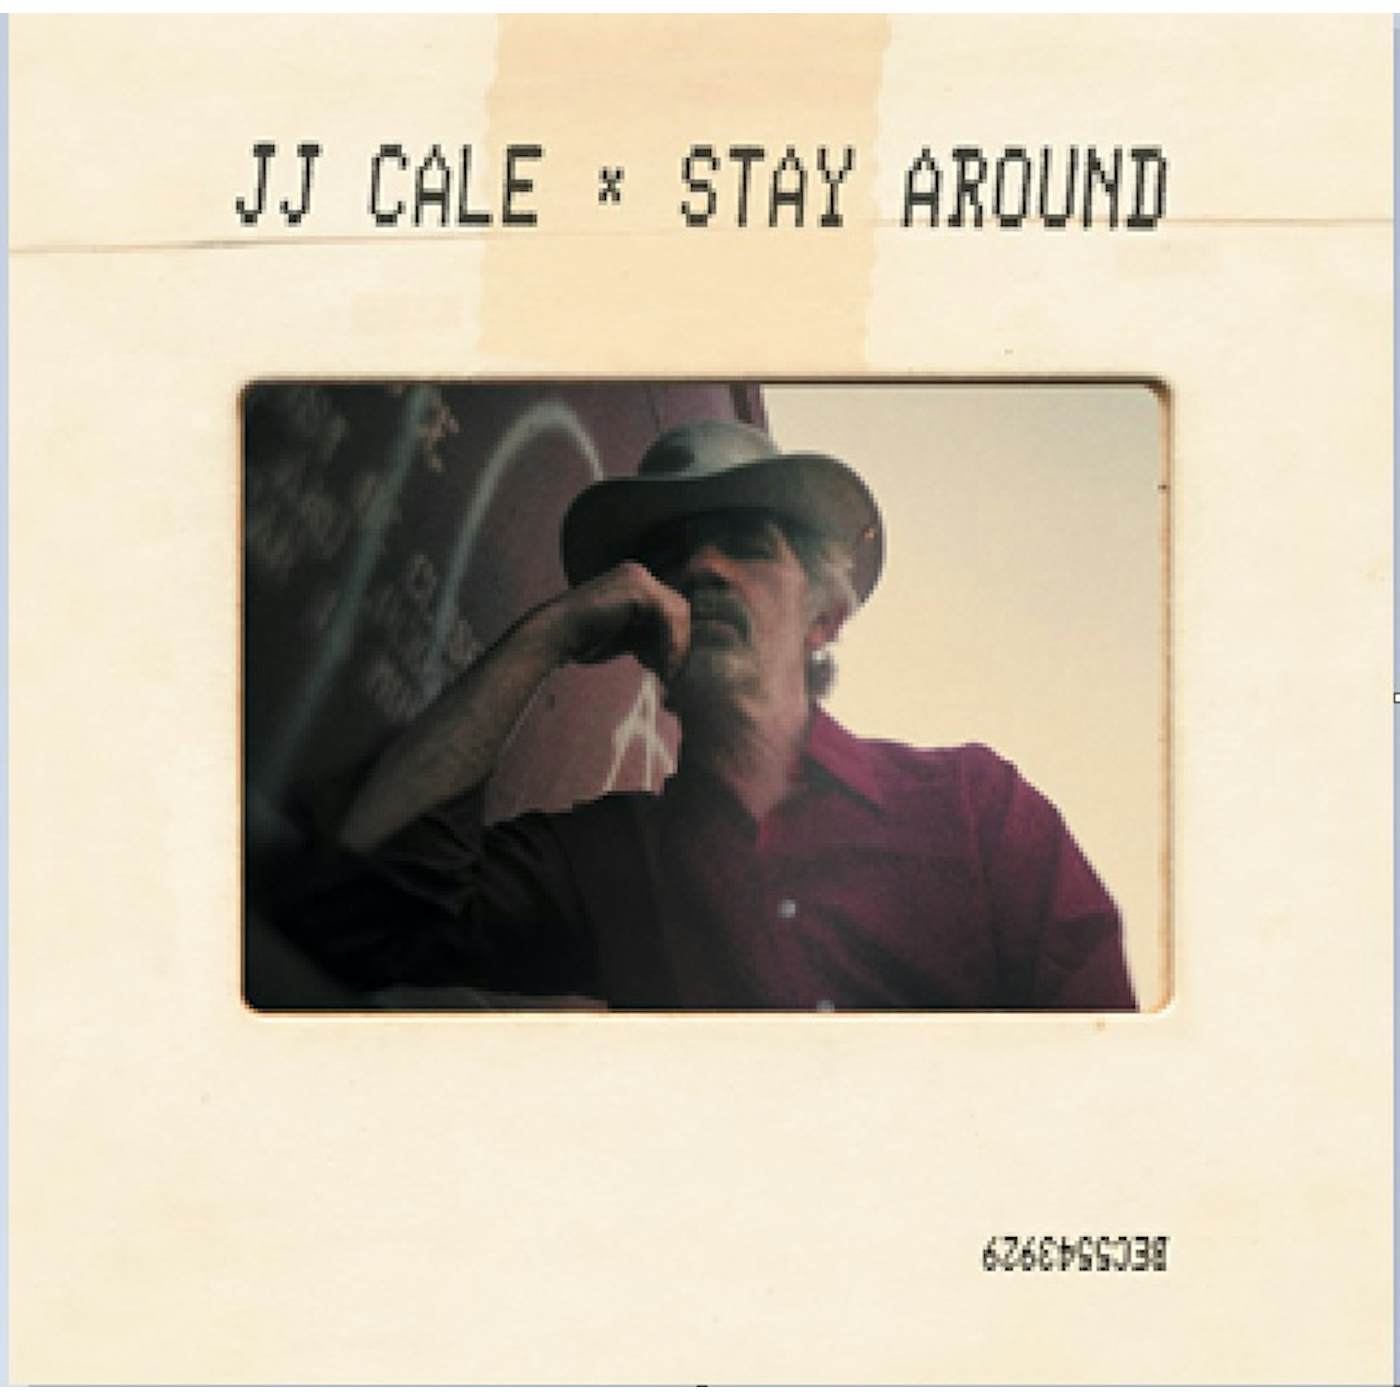 J.J. Cale STAY AROUND CD